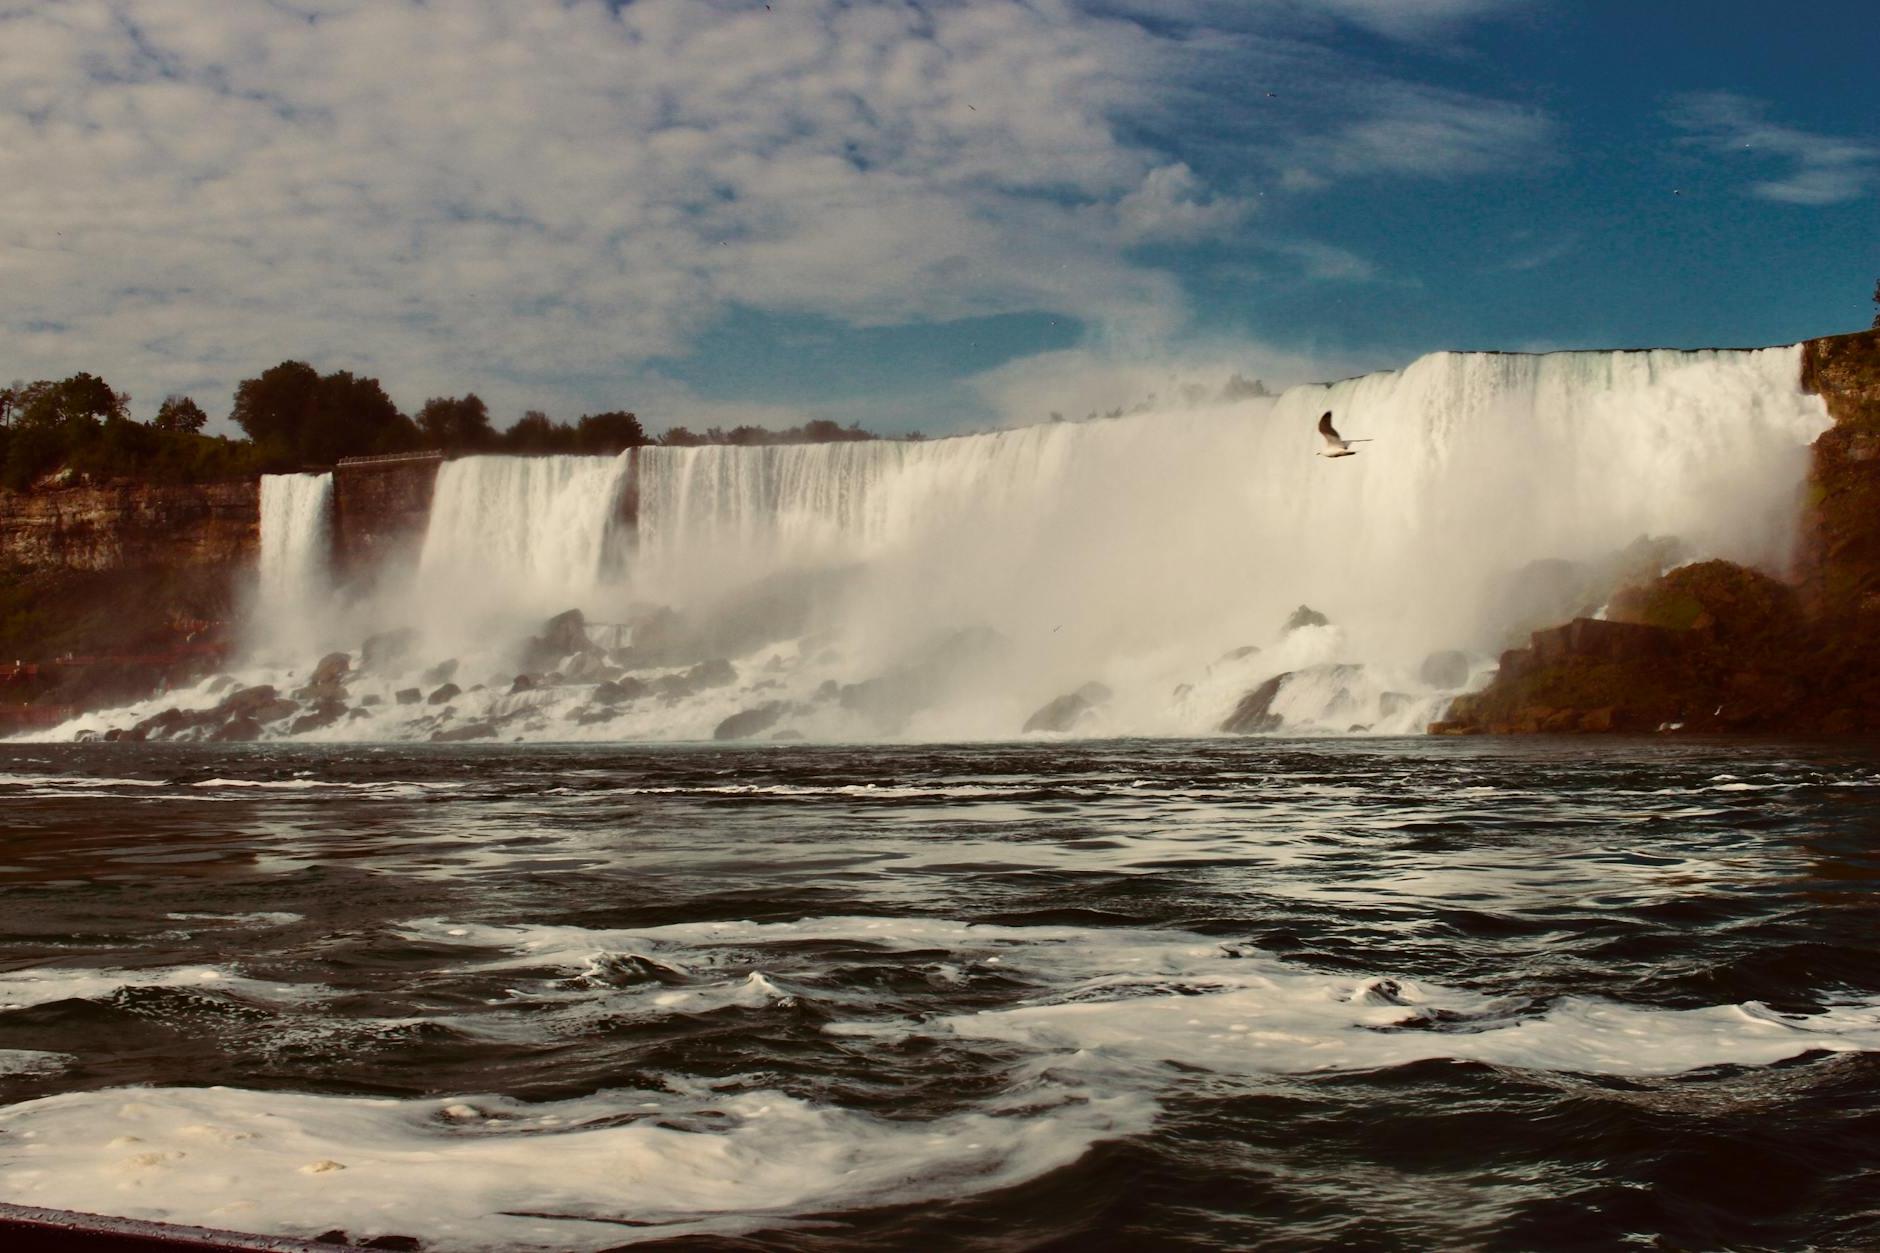 Photograph of Niagara Falls